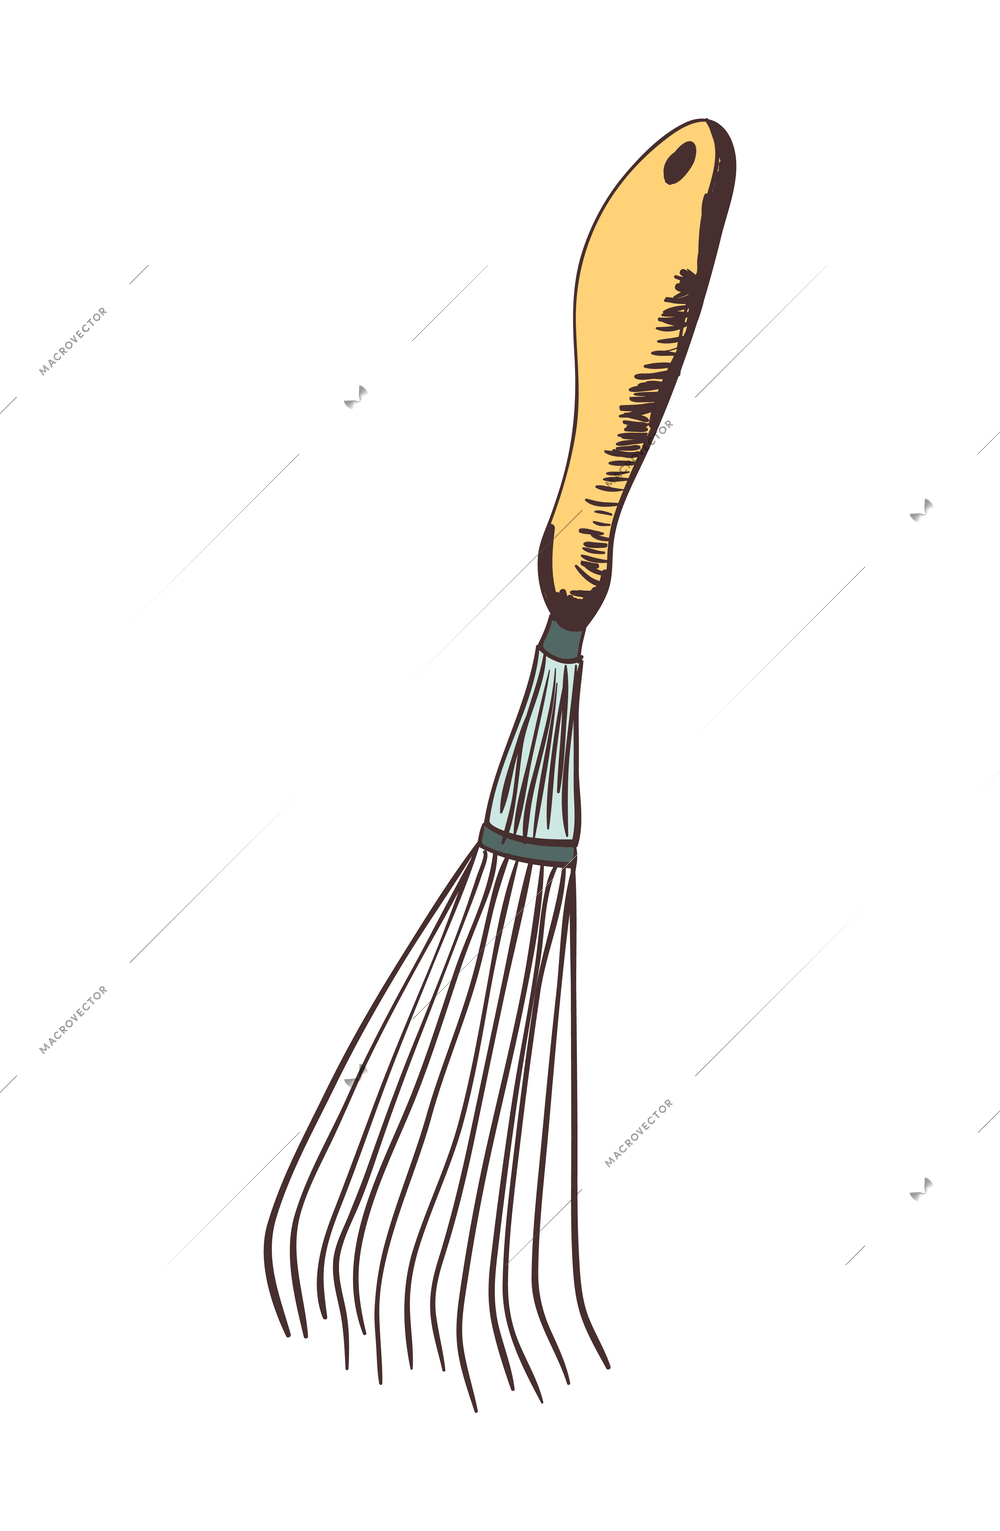 Small hand drawn garden rake on white background vector illustration